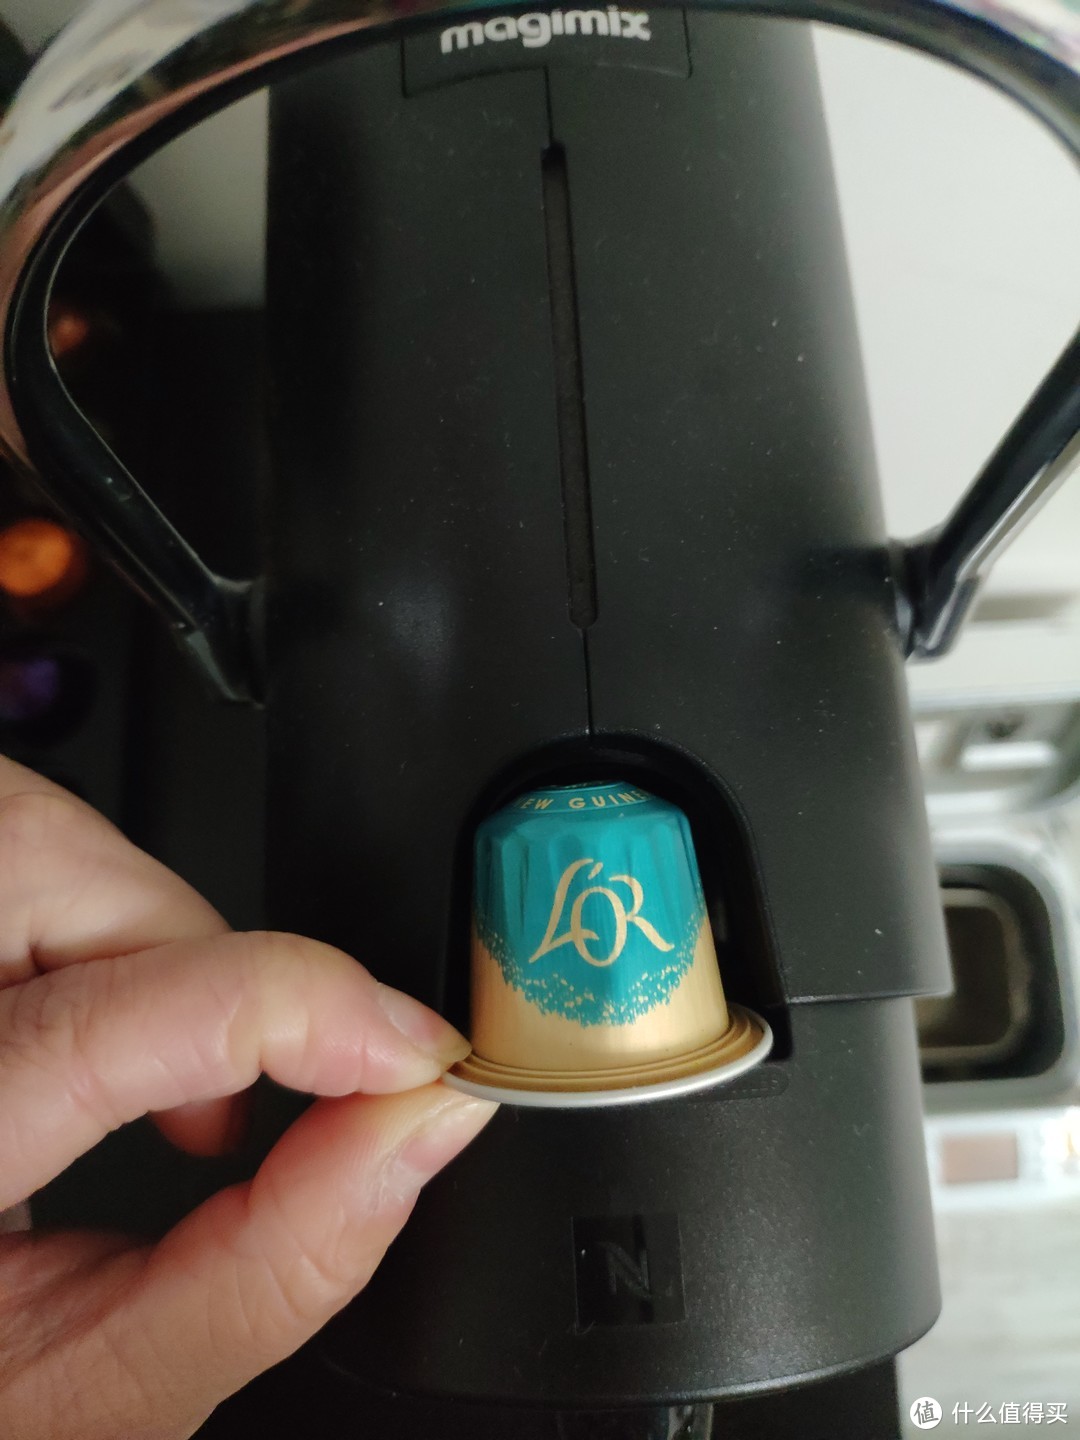 LOR兼容胶囊可以取代Nespresso原装胶囊吗？